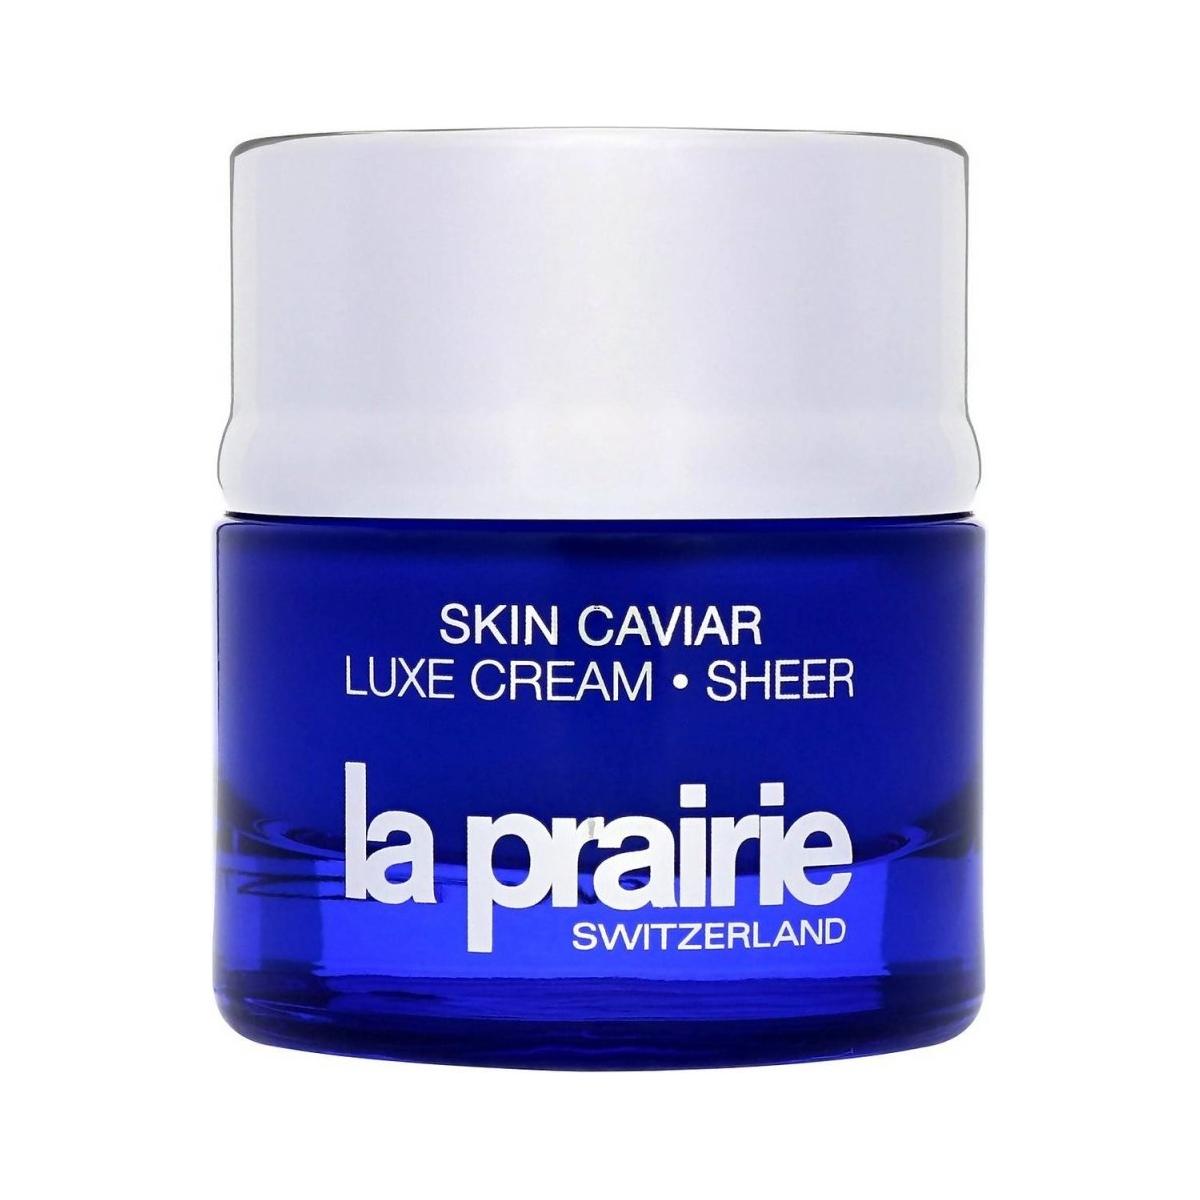 La Prairie Skin Caviar Luxe Cream Sheer 50ml - DG International Ventures Limited